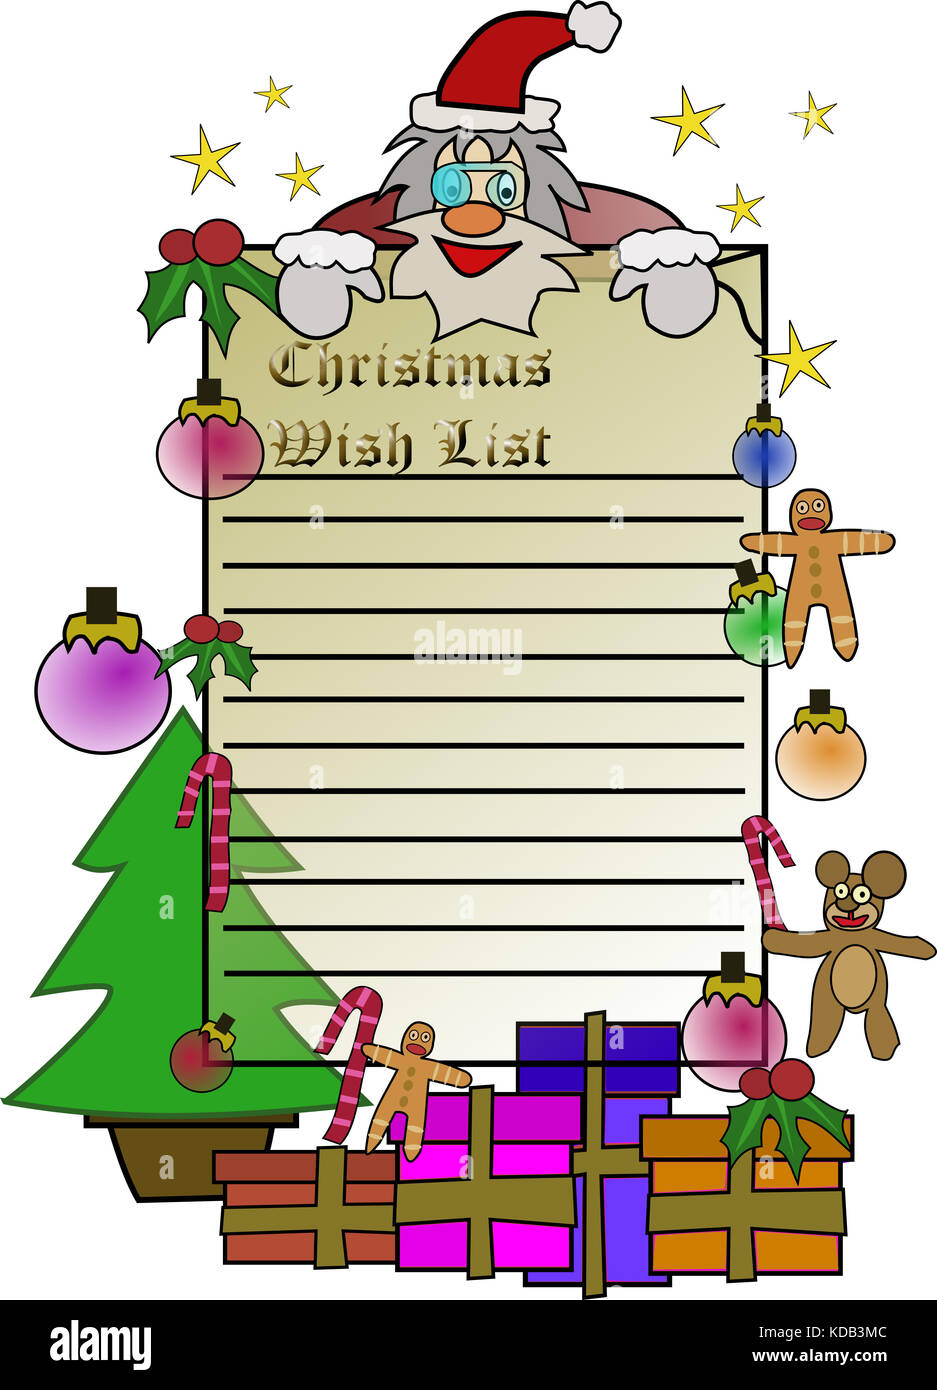 Christmas wish list Stock Photo Alamy